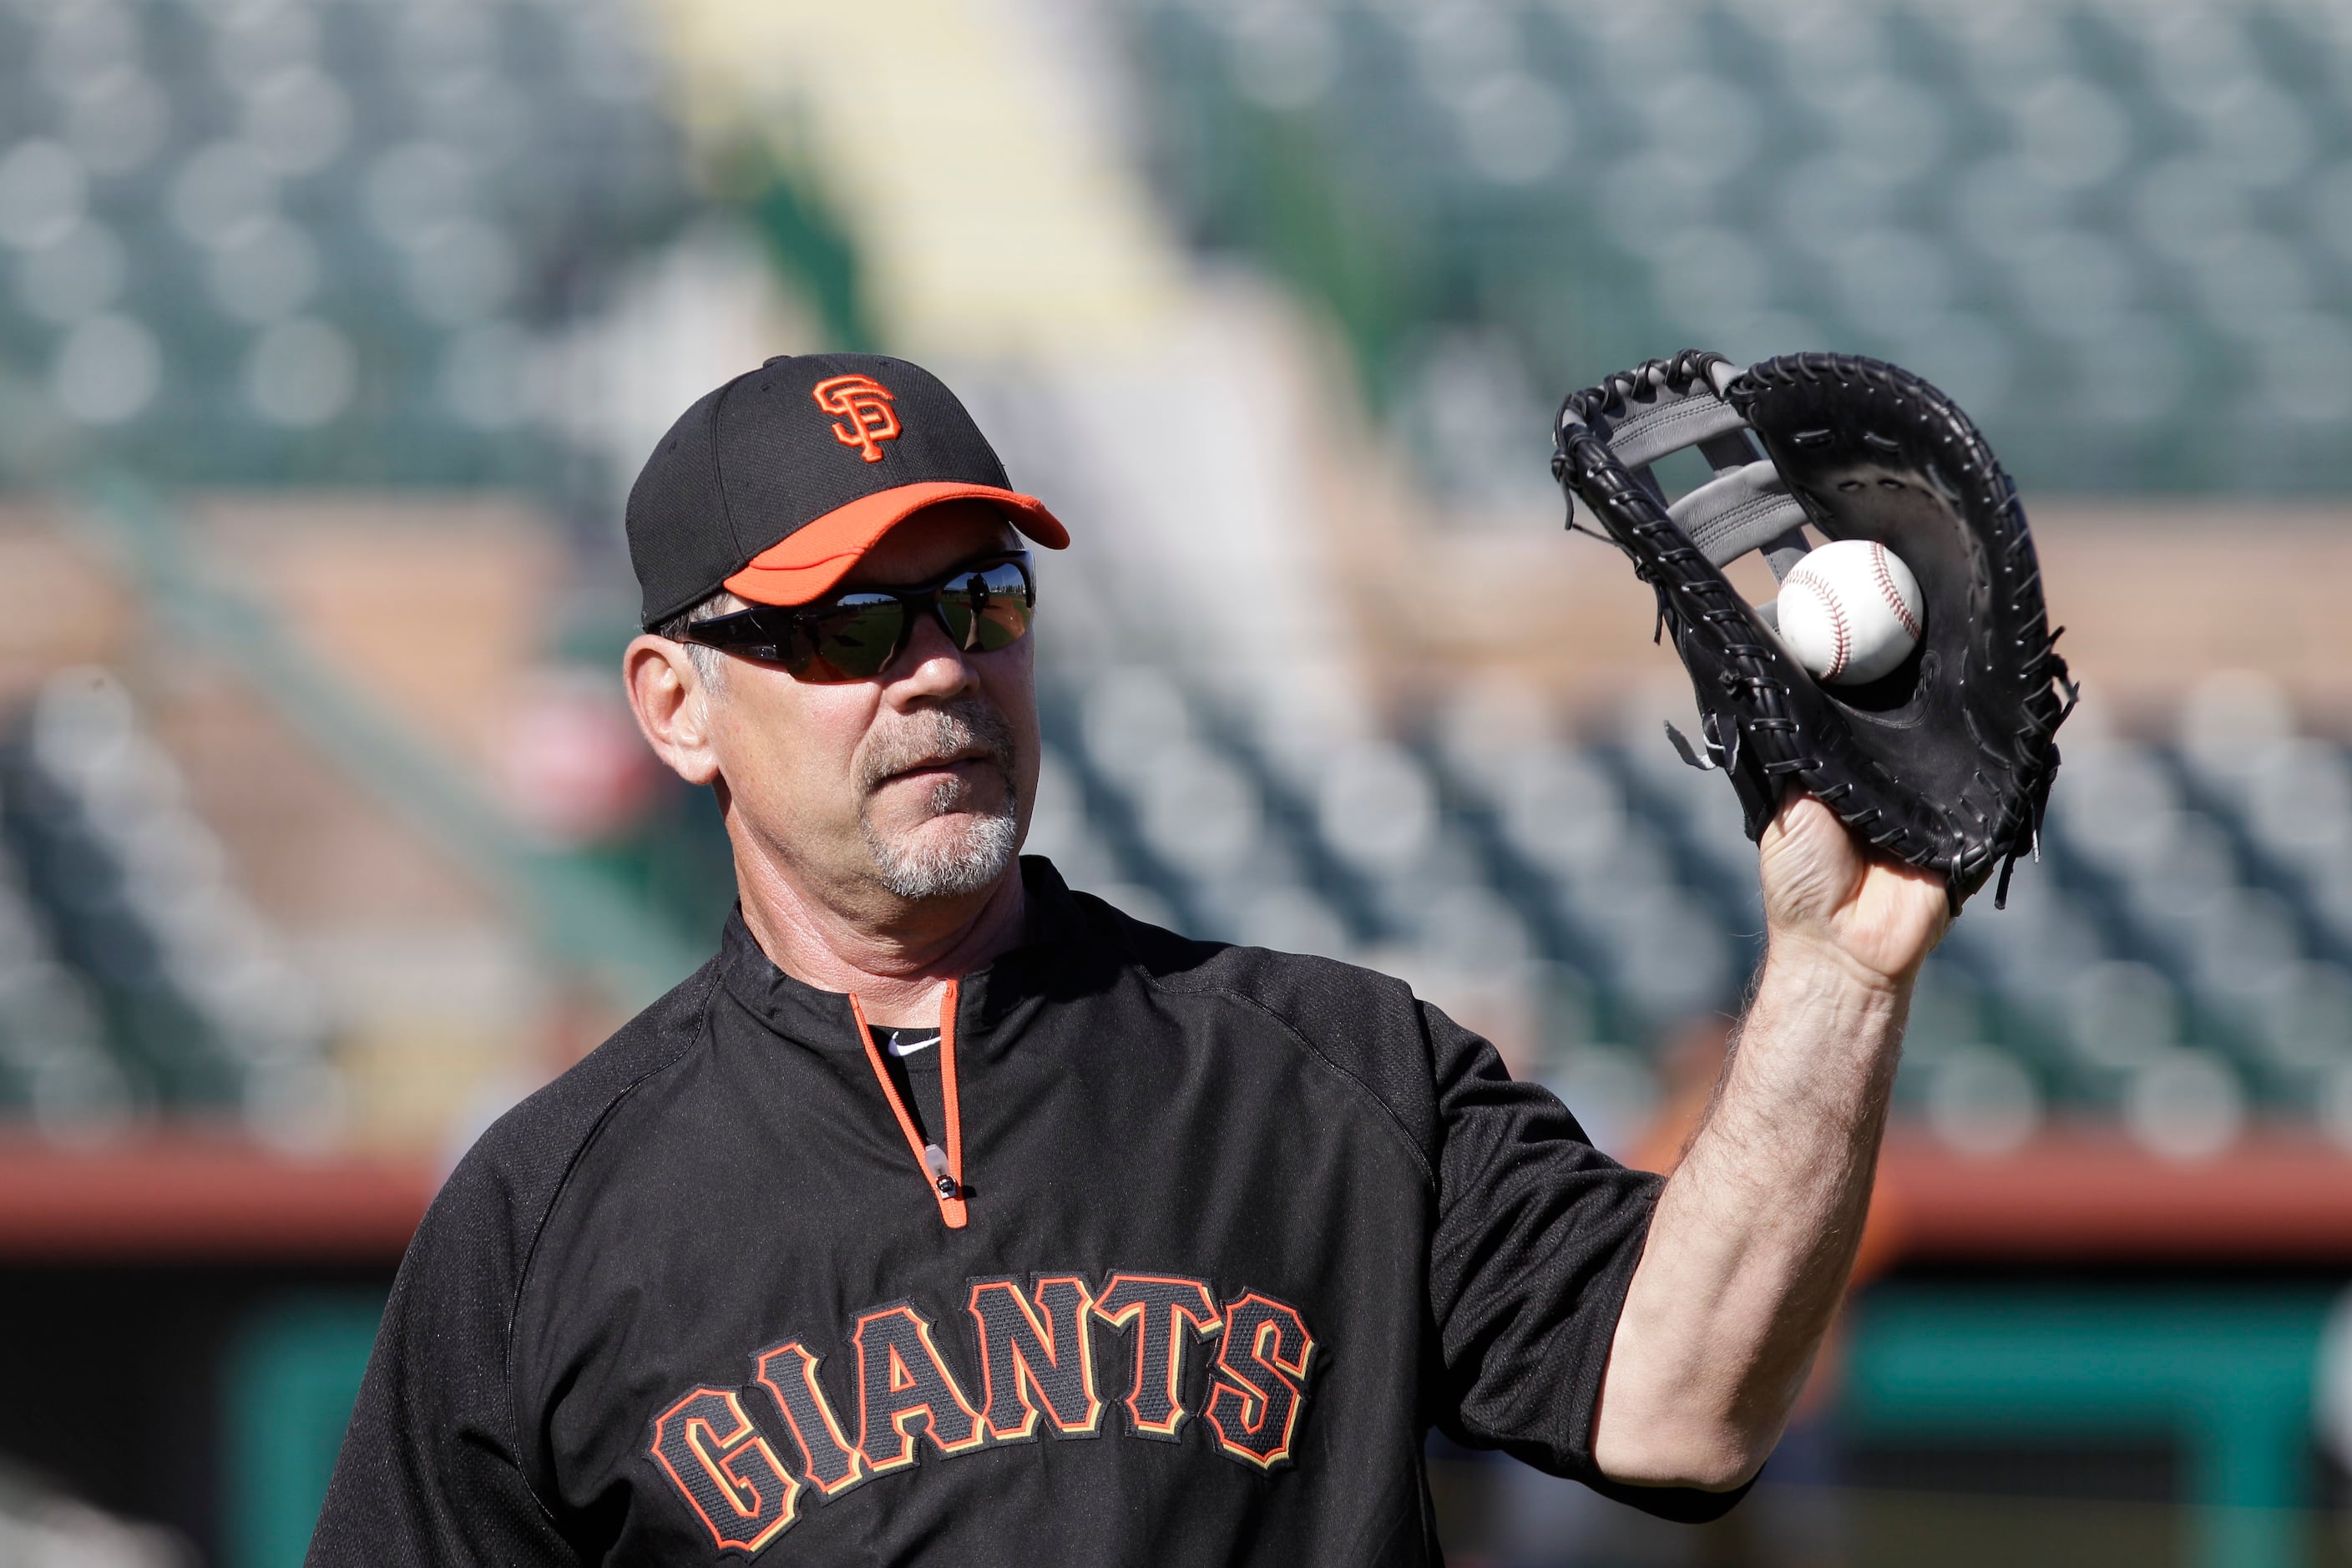 MLB News: San Francisco Giants Coach Makes Baseball History